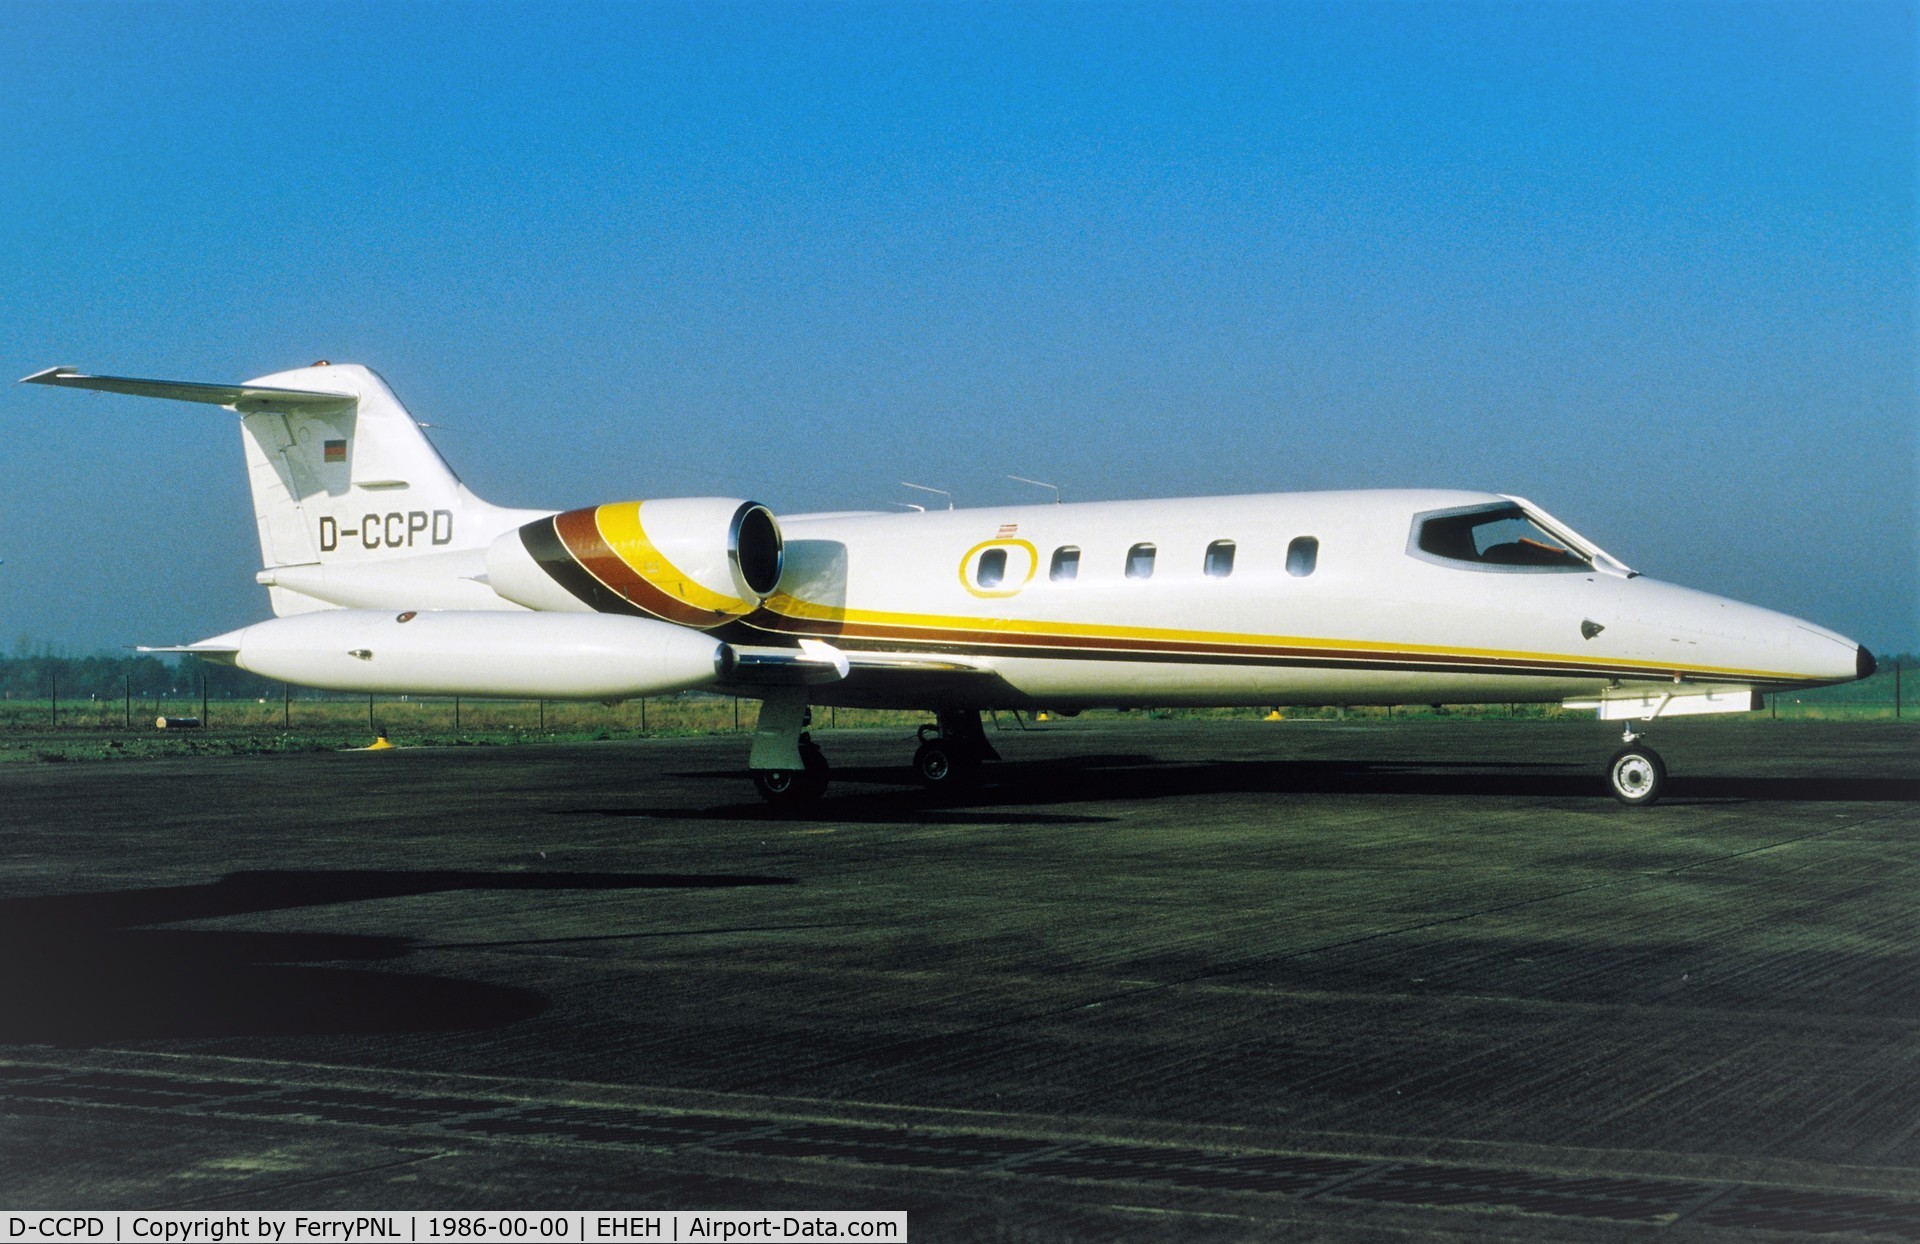 D-CCPD, 1974 Gates Learjet 36 C/N 004, Air Traffic Executive Jet Lj36